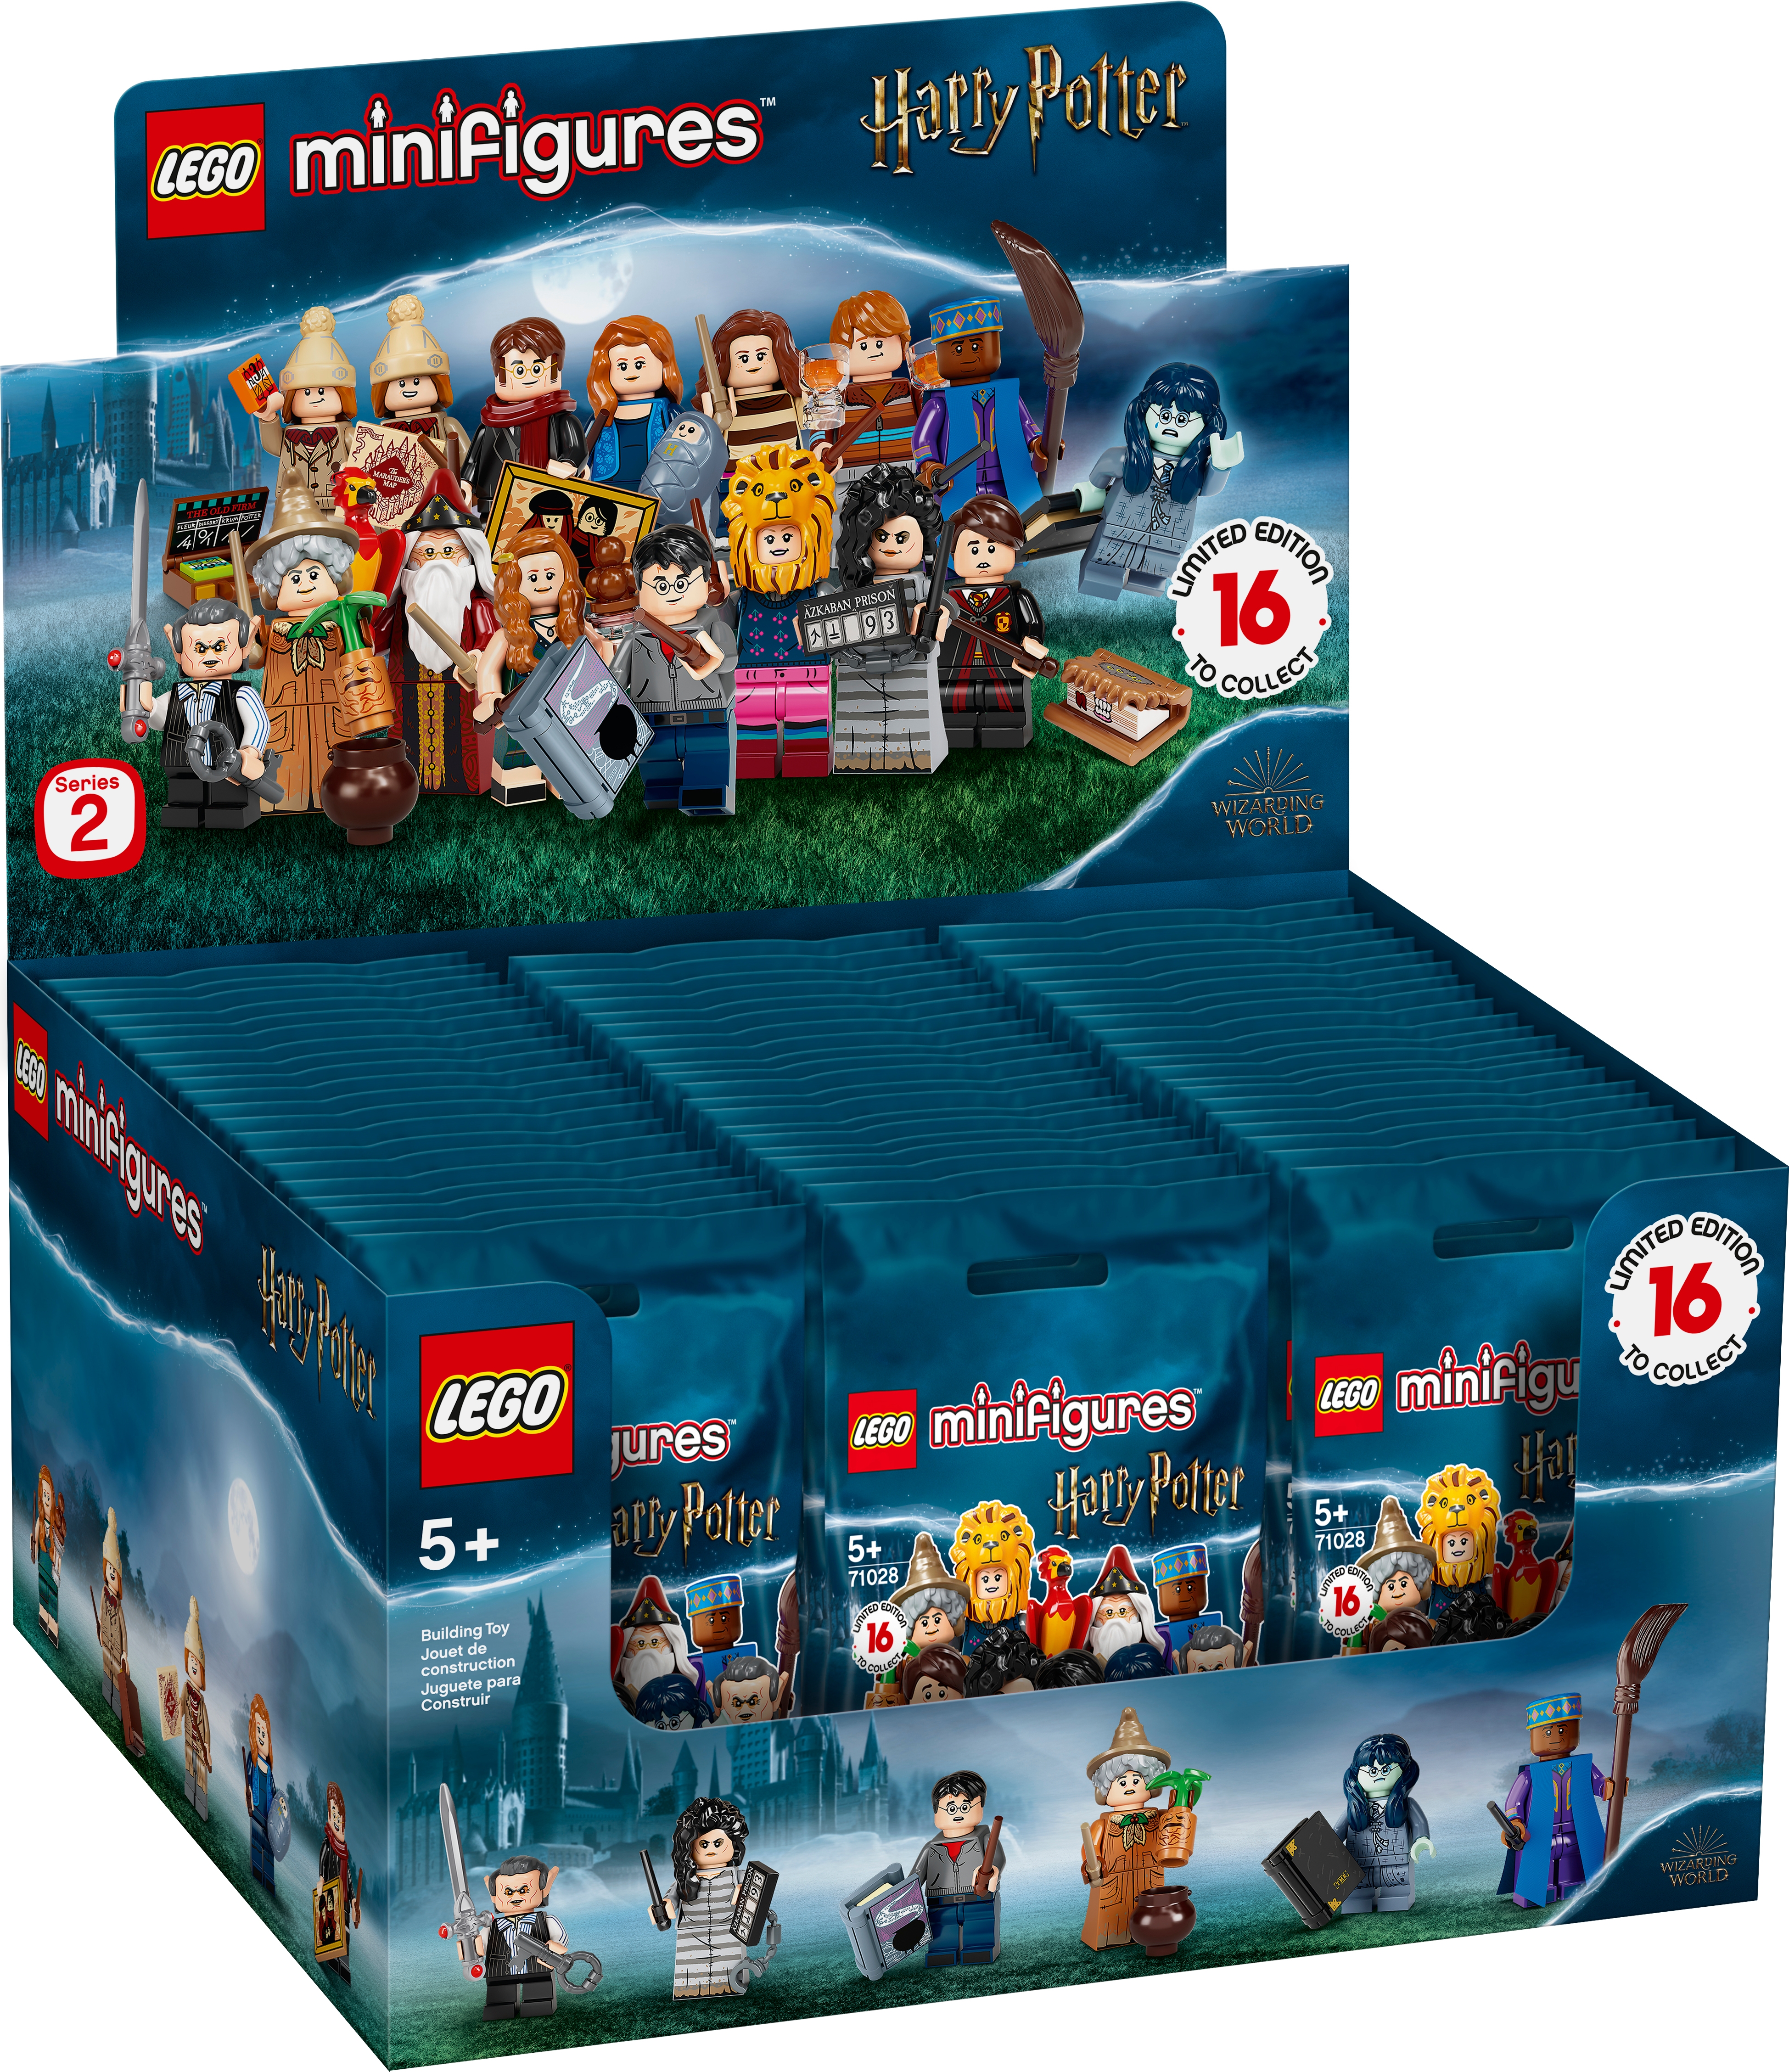 for sale online Lego Harry Potter Series 2 Minifigures 71028 